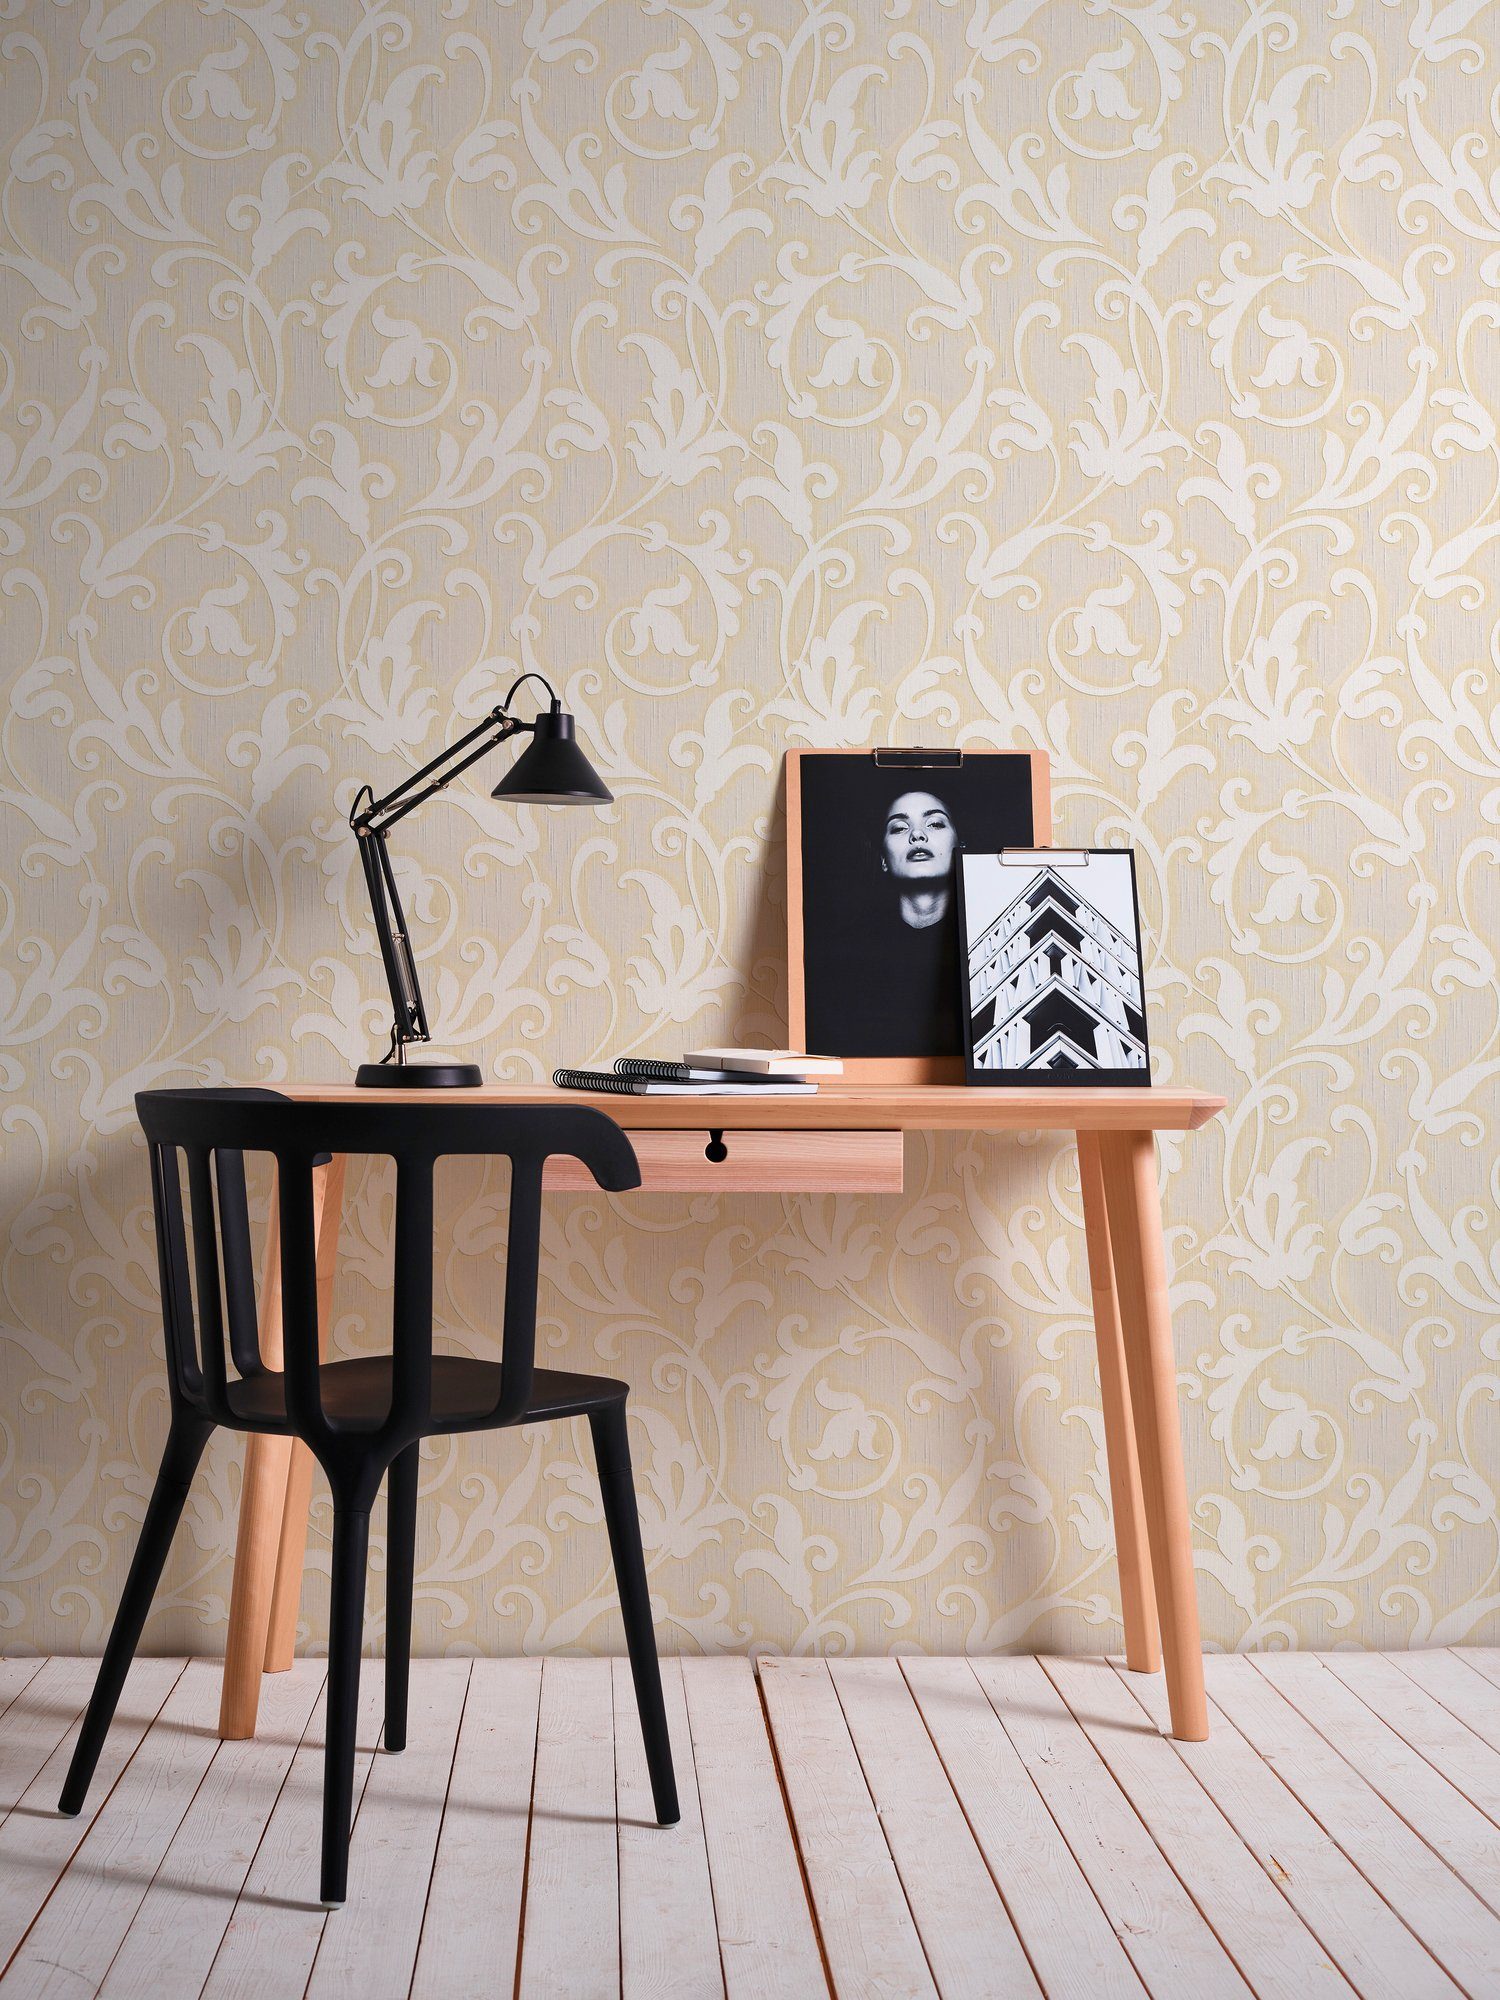 A.S. Création Architects Paper creme/beige/gold Barock, Barock Textiltapete Tessuto, floral, Tapete samtig